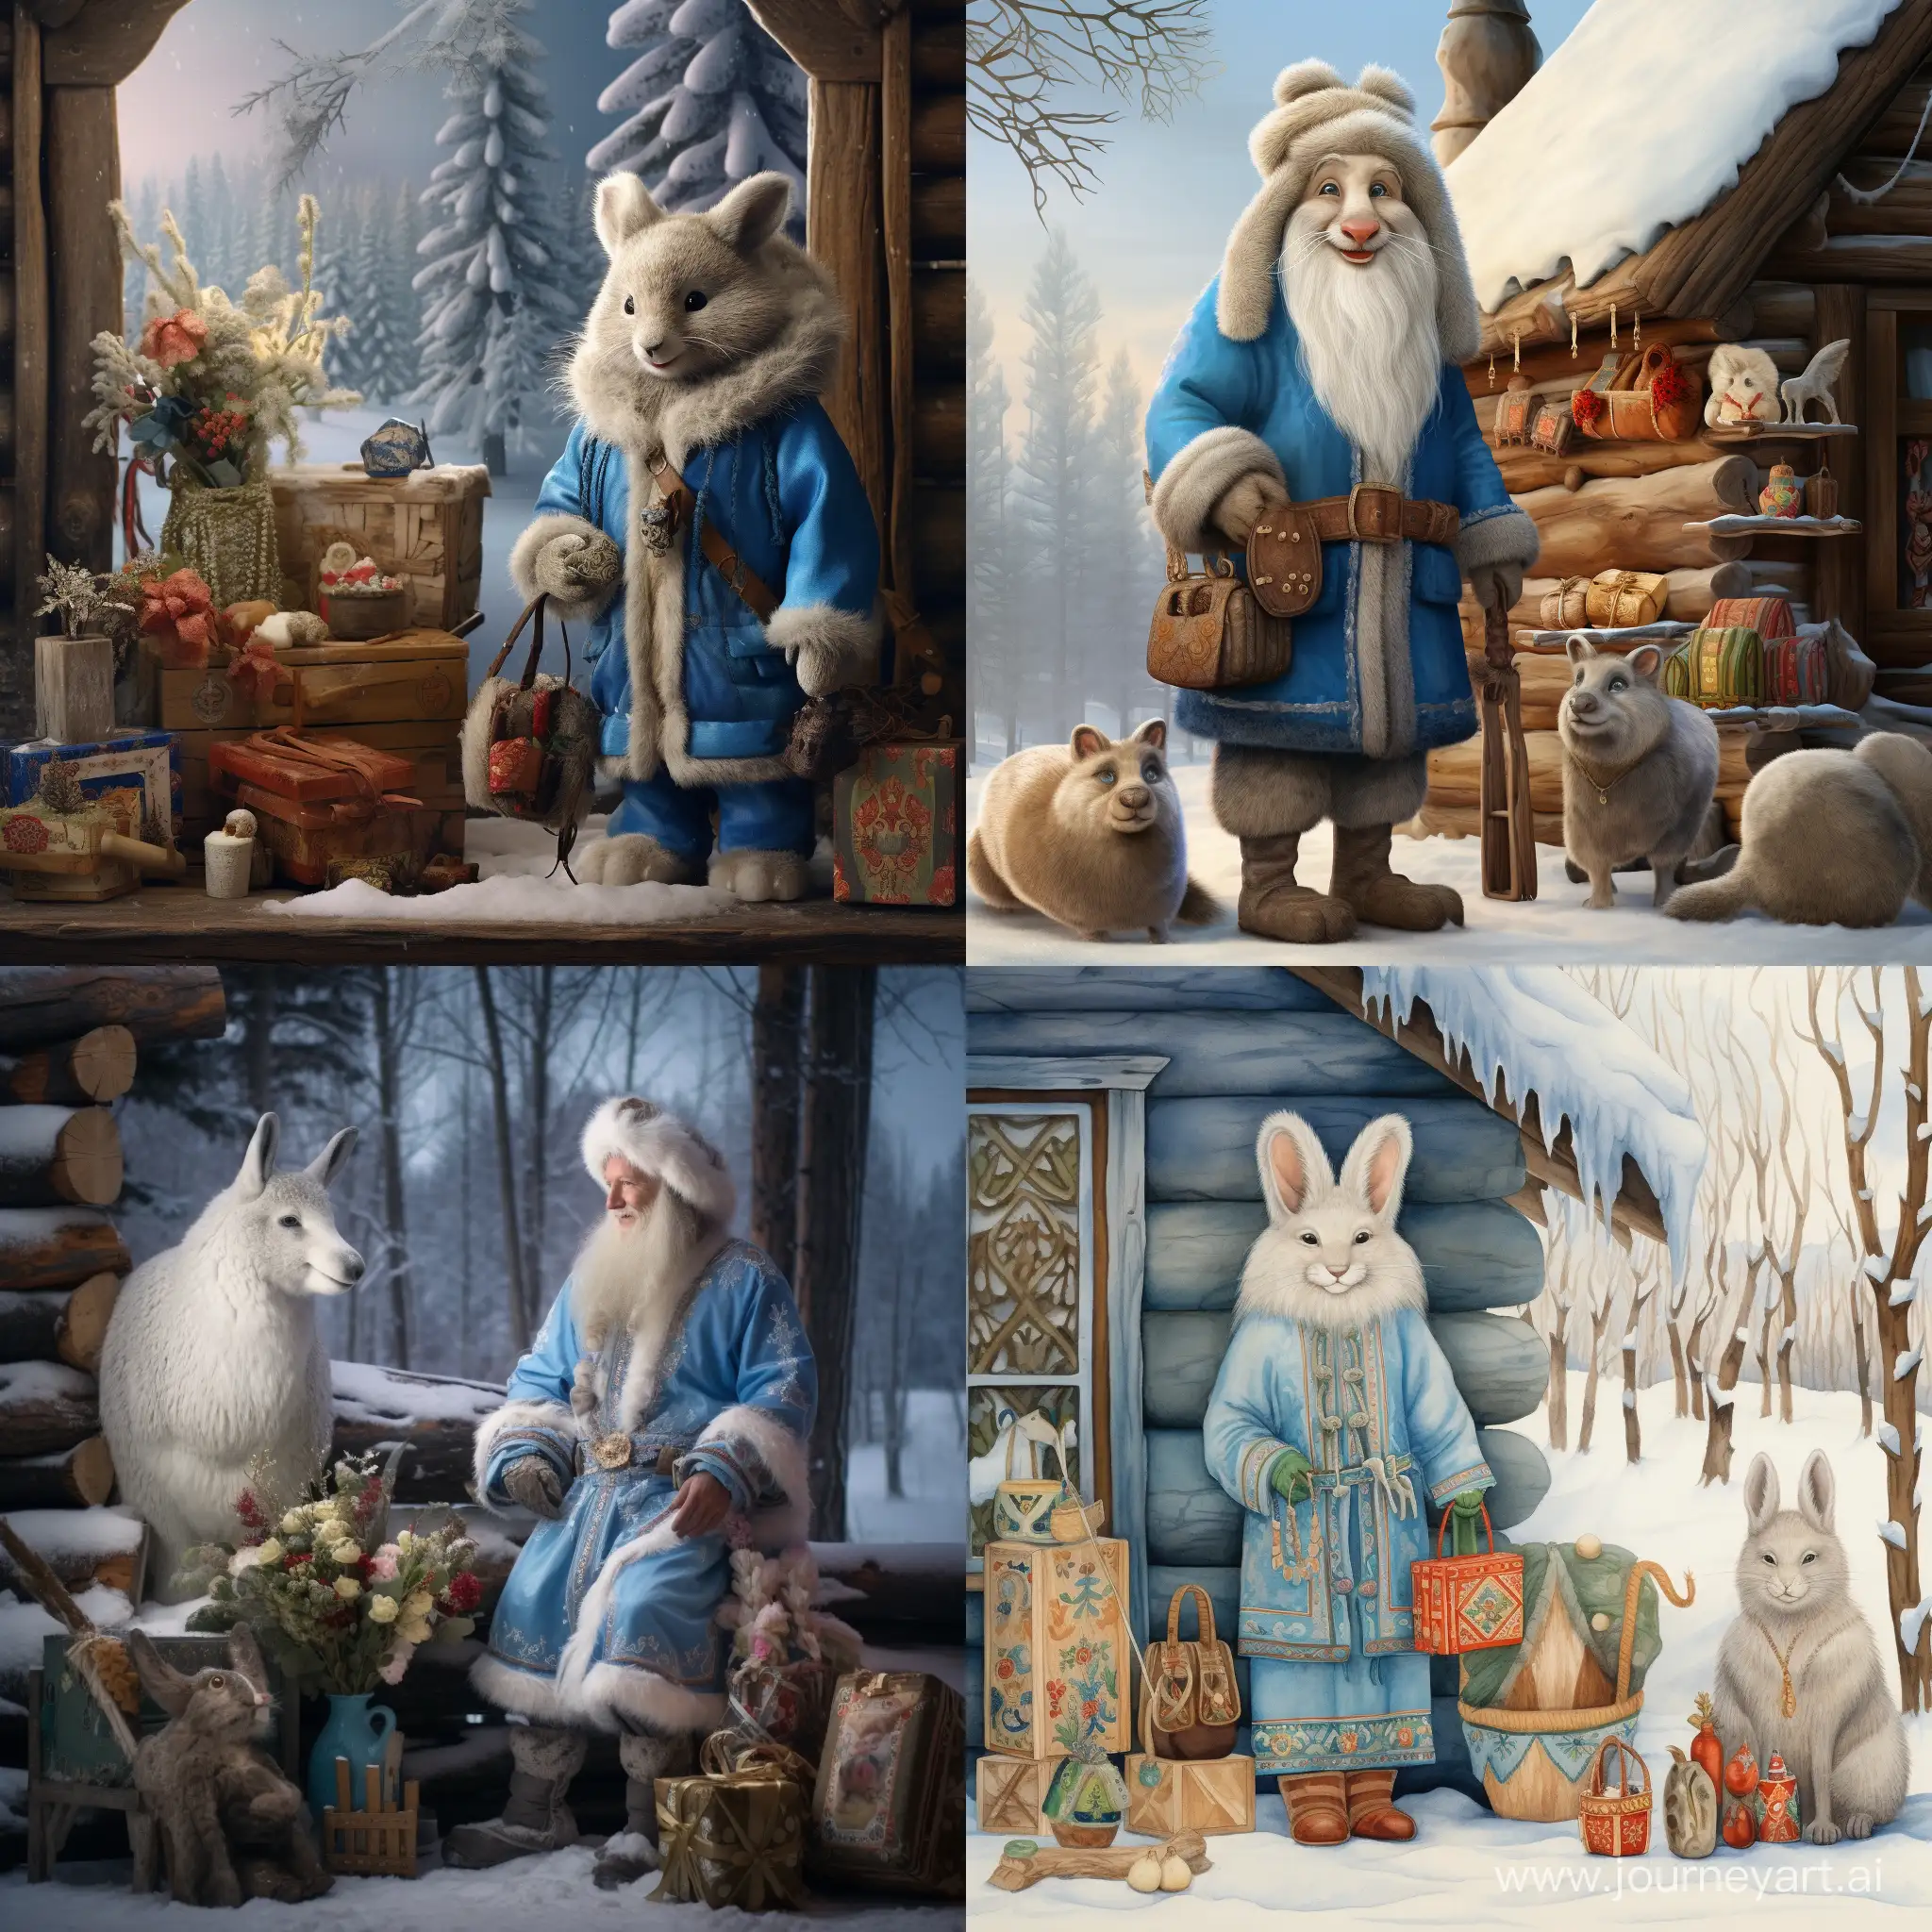 Winter-Magic-Ded-Moroz-and-Snegurochka-Spread-Joy-in-a-Forest-Haven